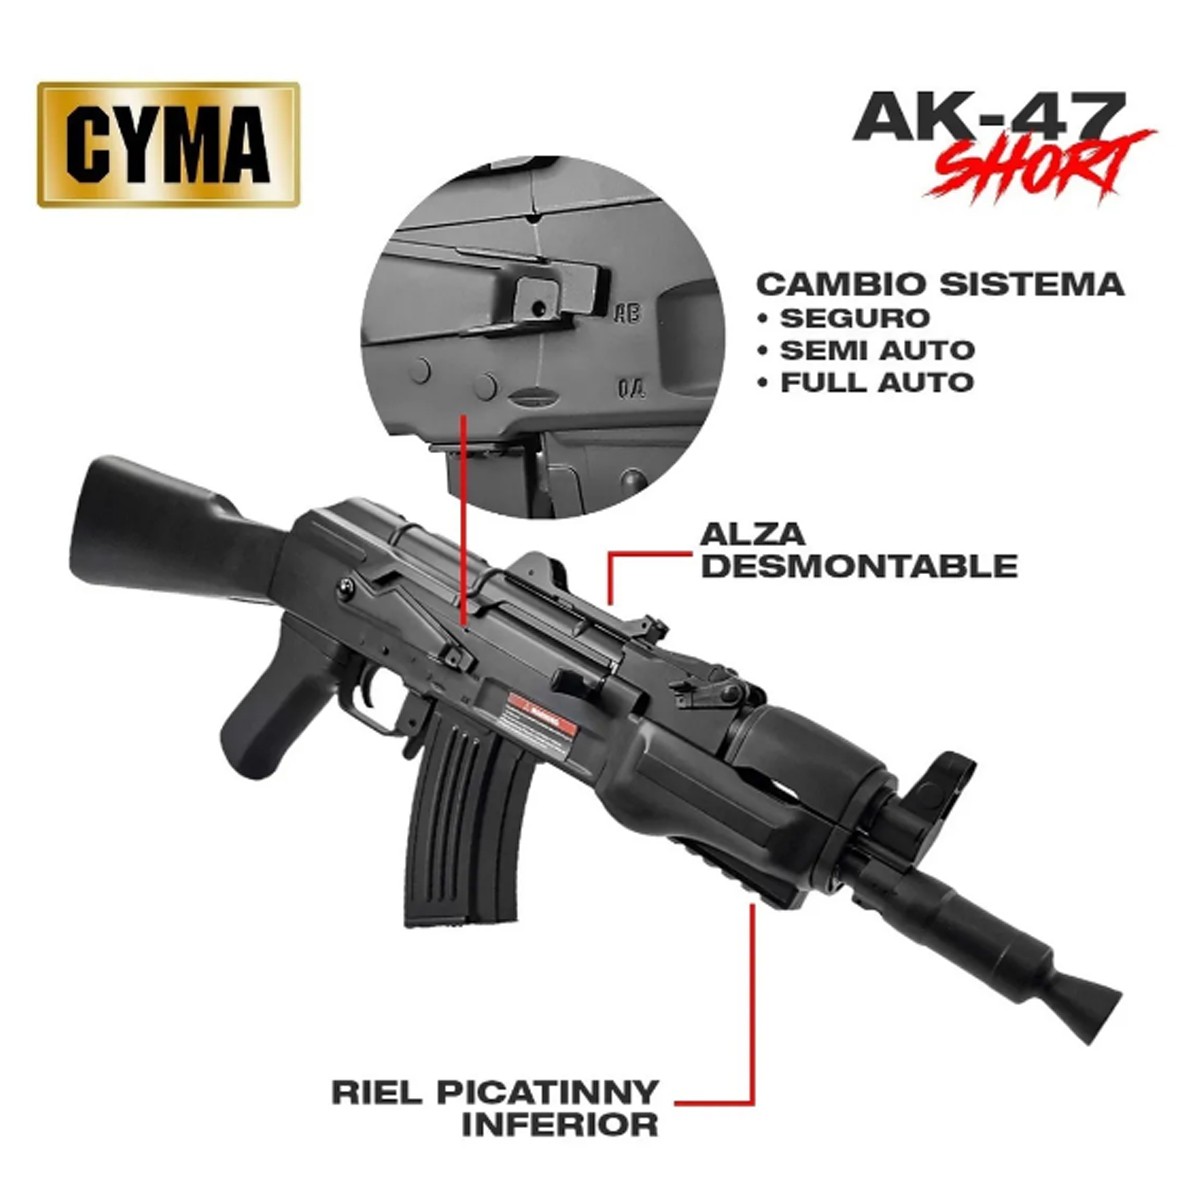 Marcadora Airsoft Cyma Ak47 Short – Guantanamo